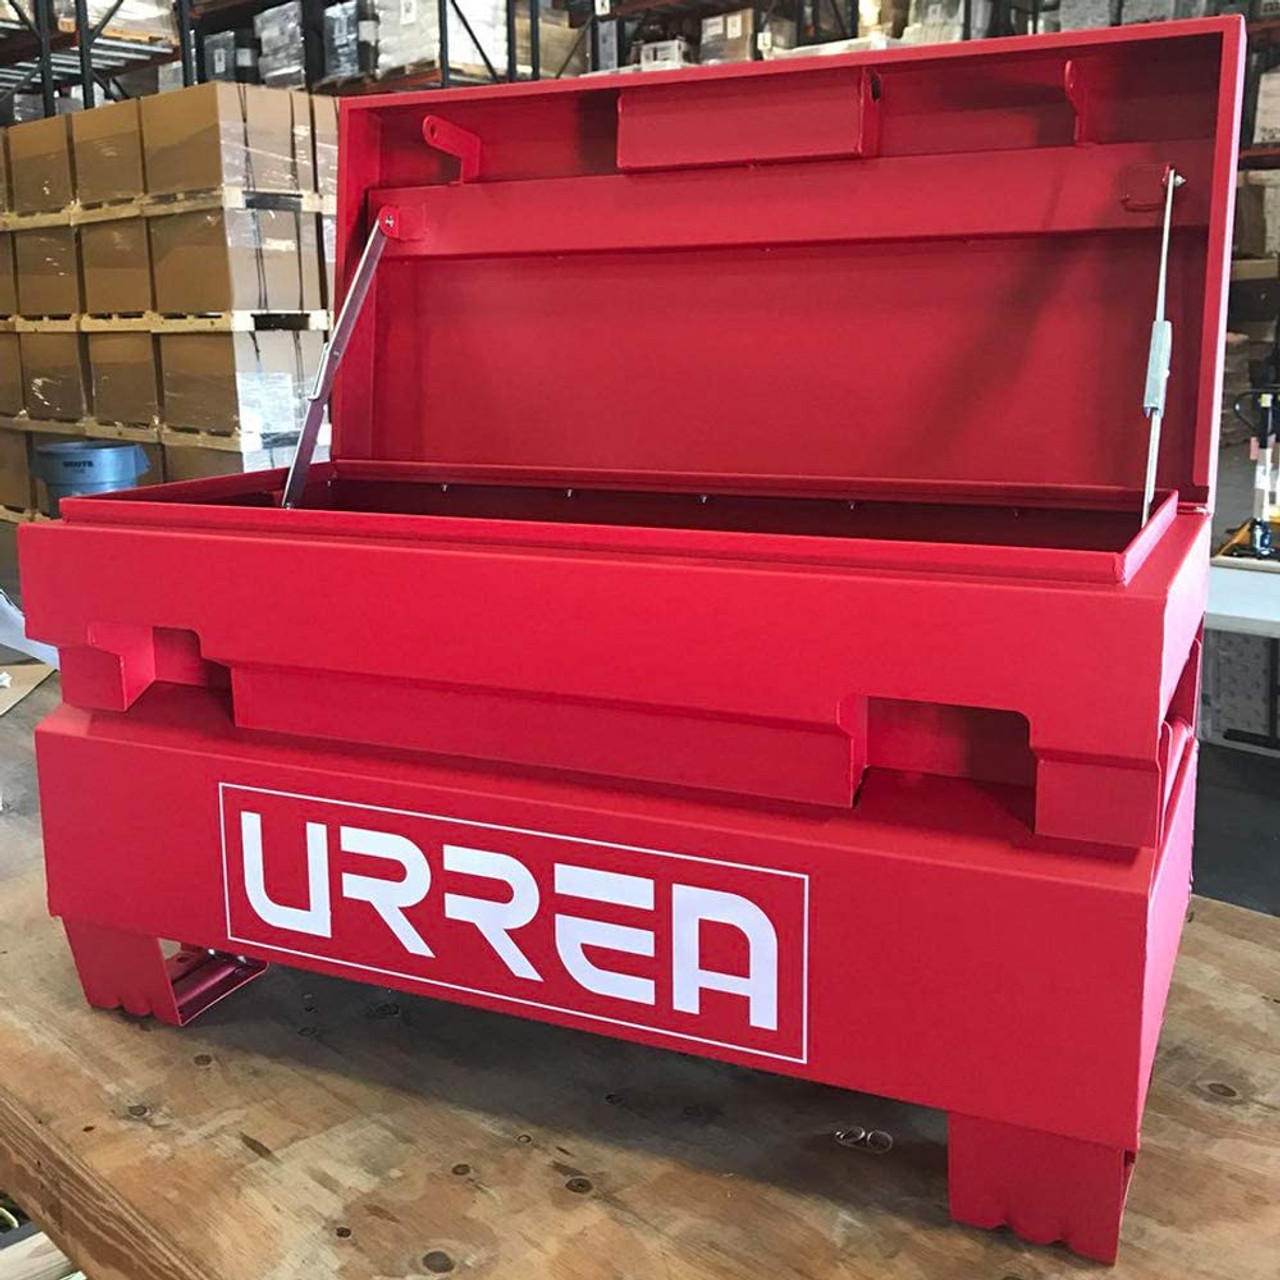 URREA Job Box - 48" Jobsite Tool Storage Chest with Heavy-Duty Steel Construction & 1102lb Total Load Capacity - JSB48